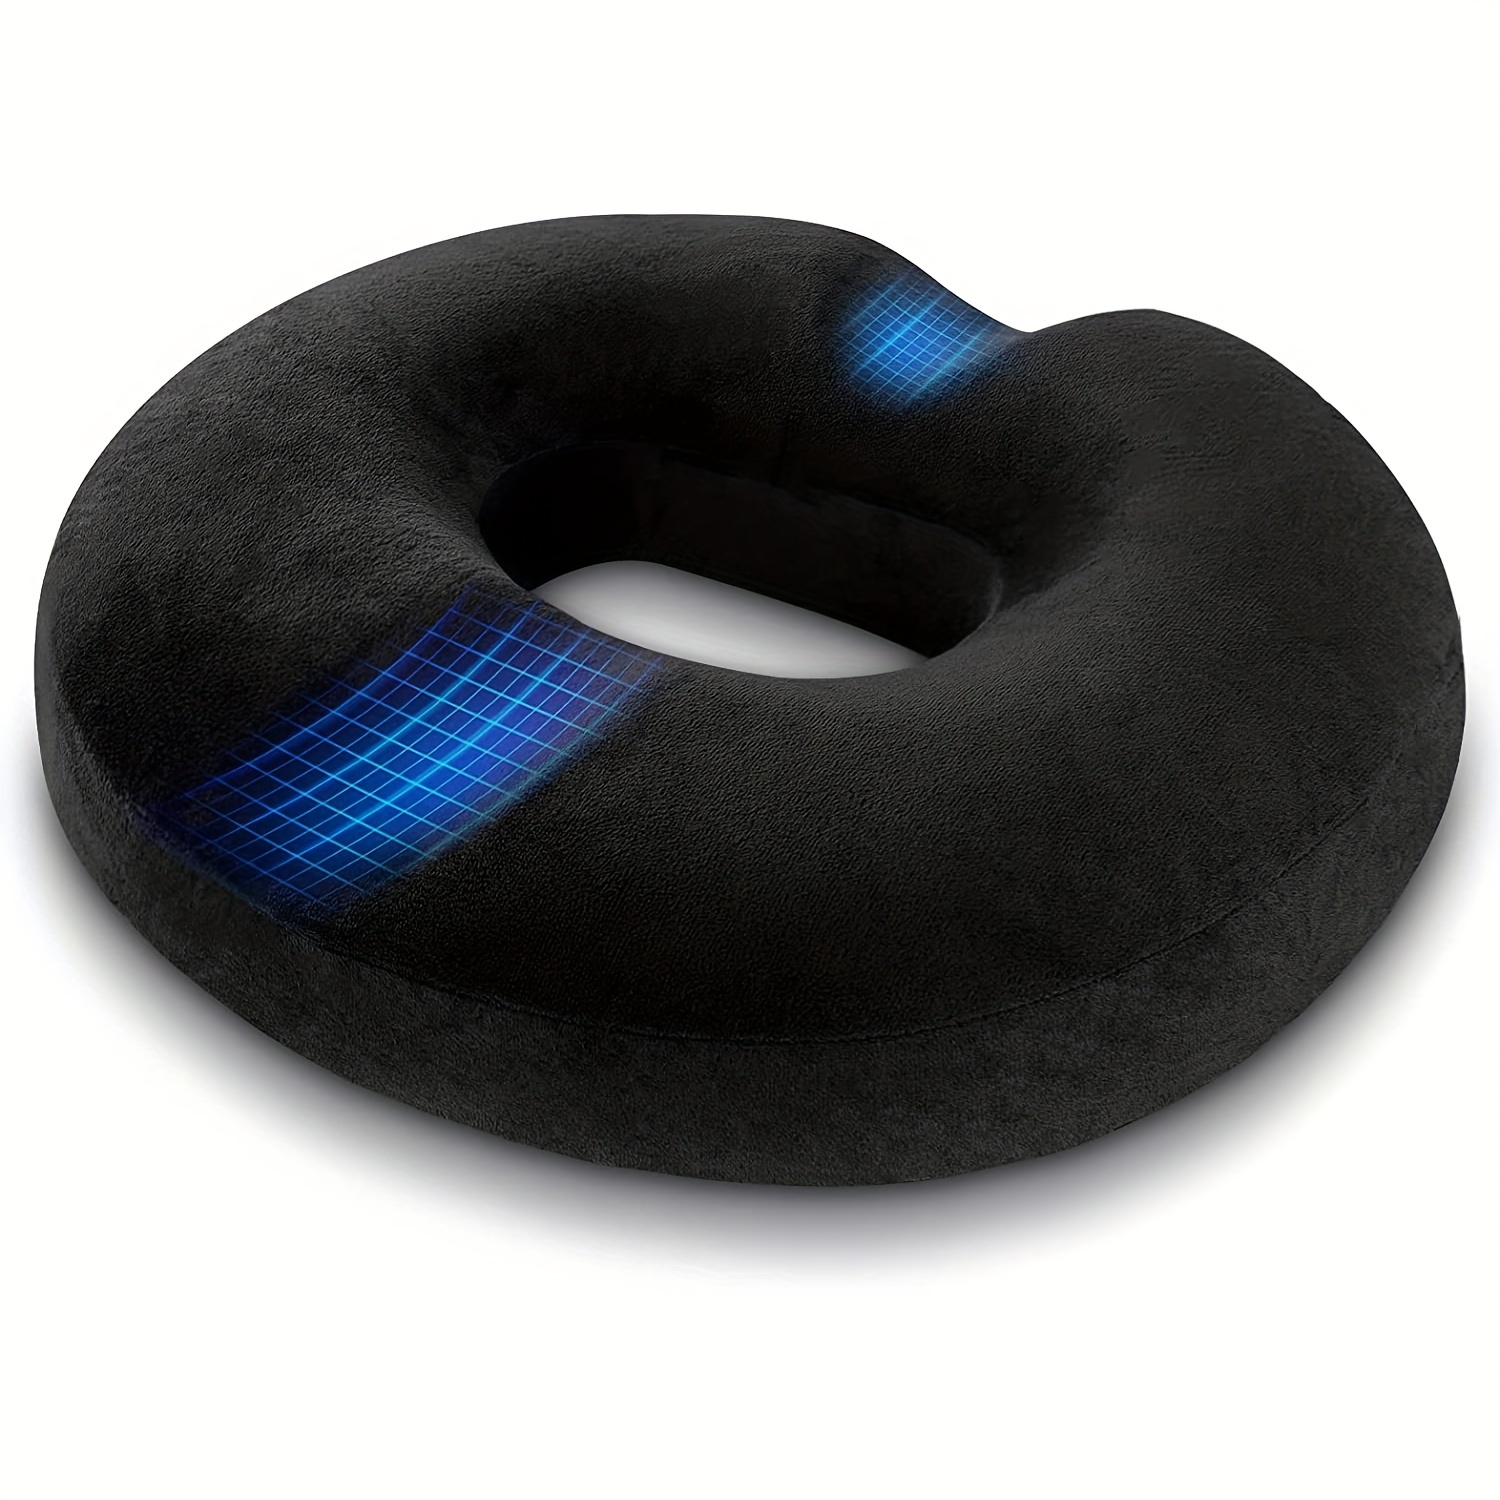 Donut Pillow Hemorrhoid Tailbone Cushion – Small Black Seat